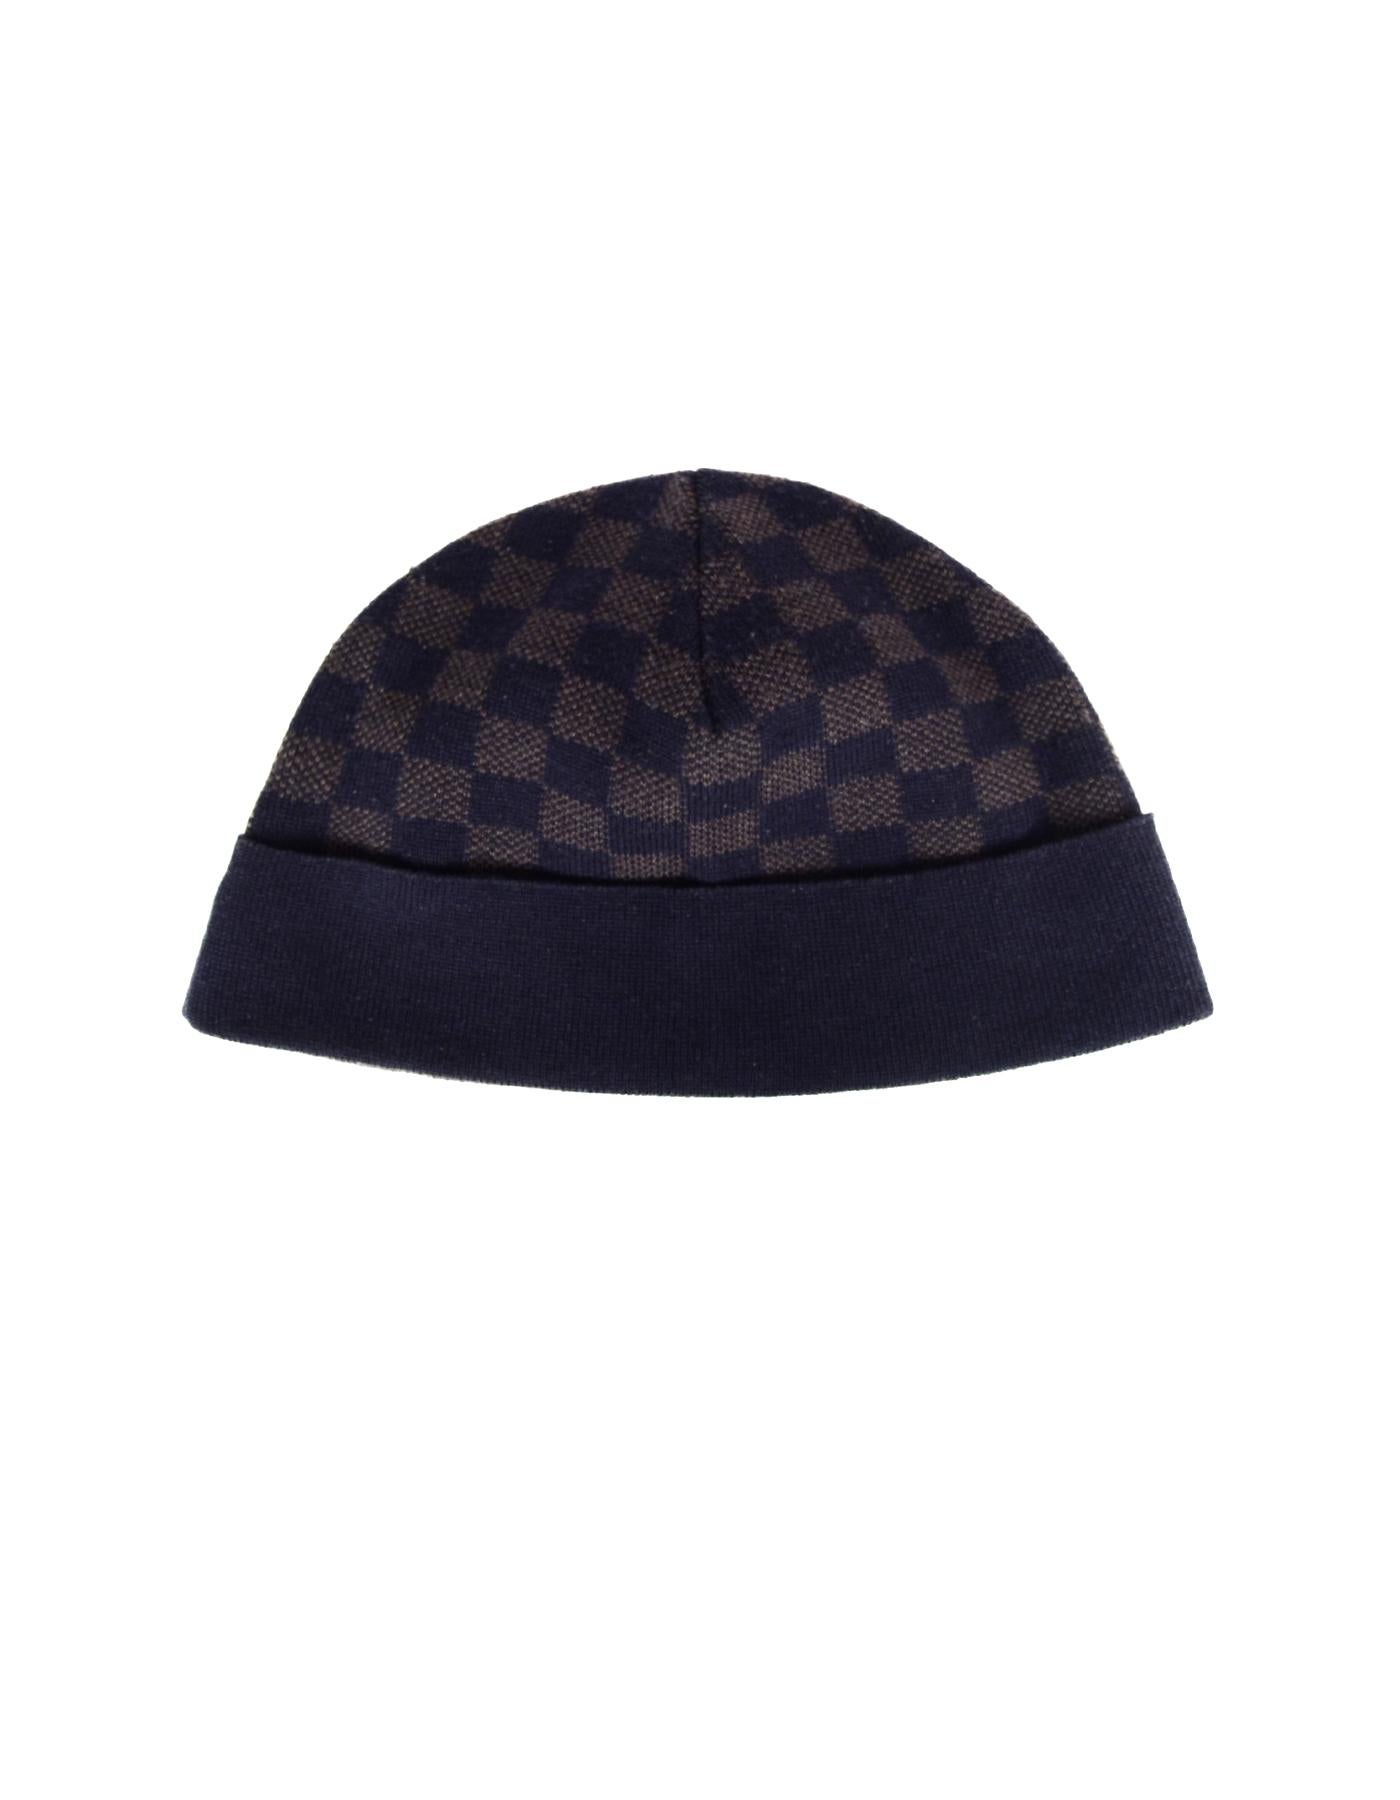 Black Louis Vuitton Navy/Brown Wool Bonnet Petit Damier Beanie Hat